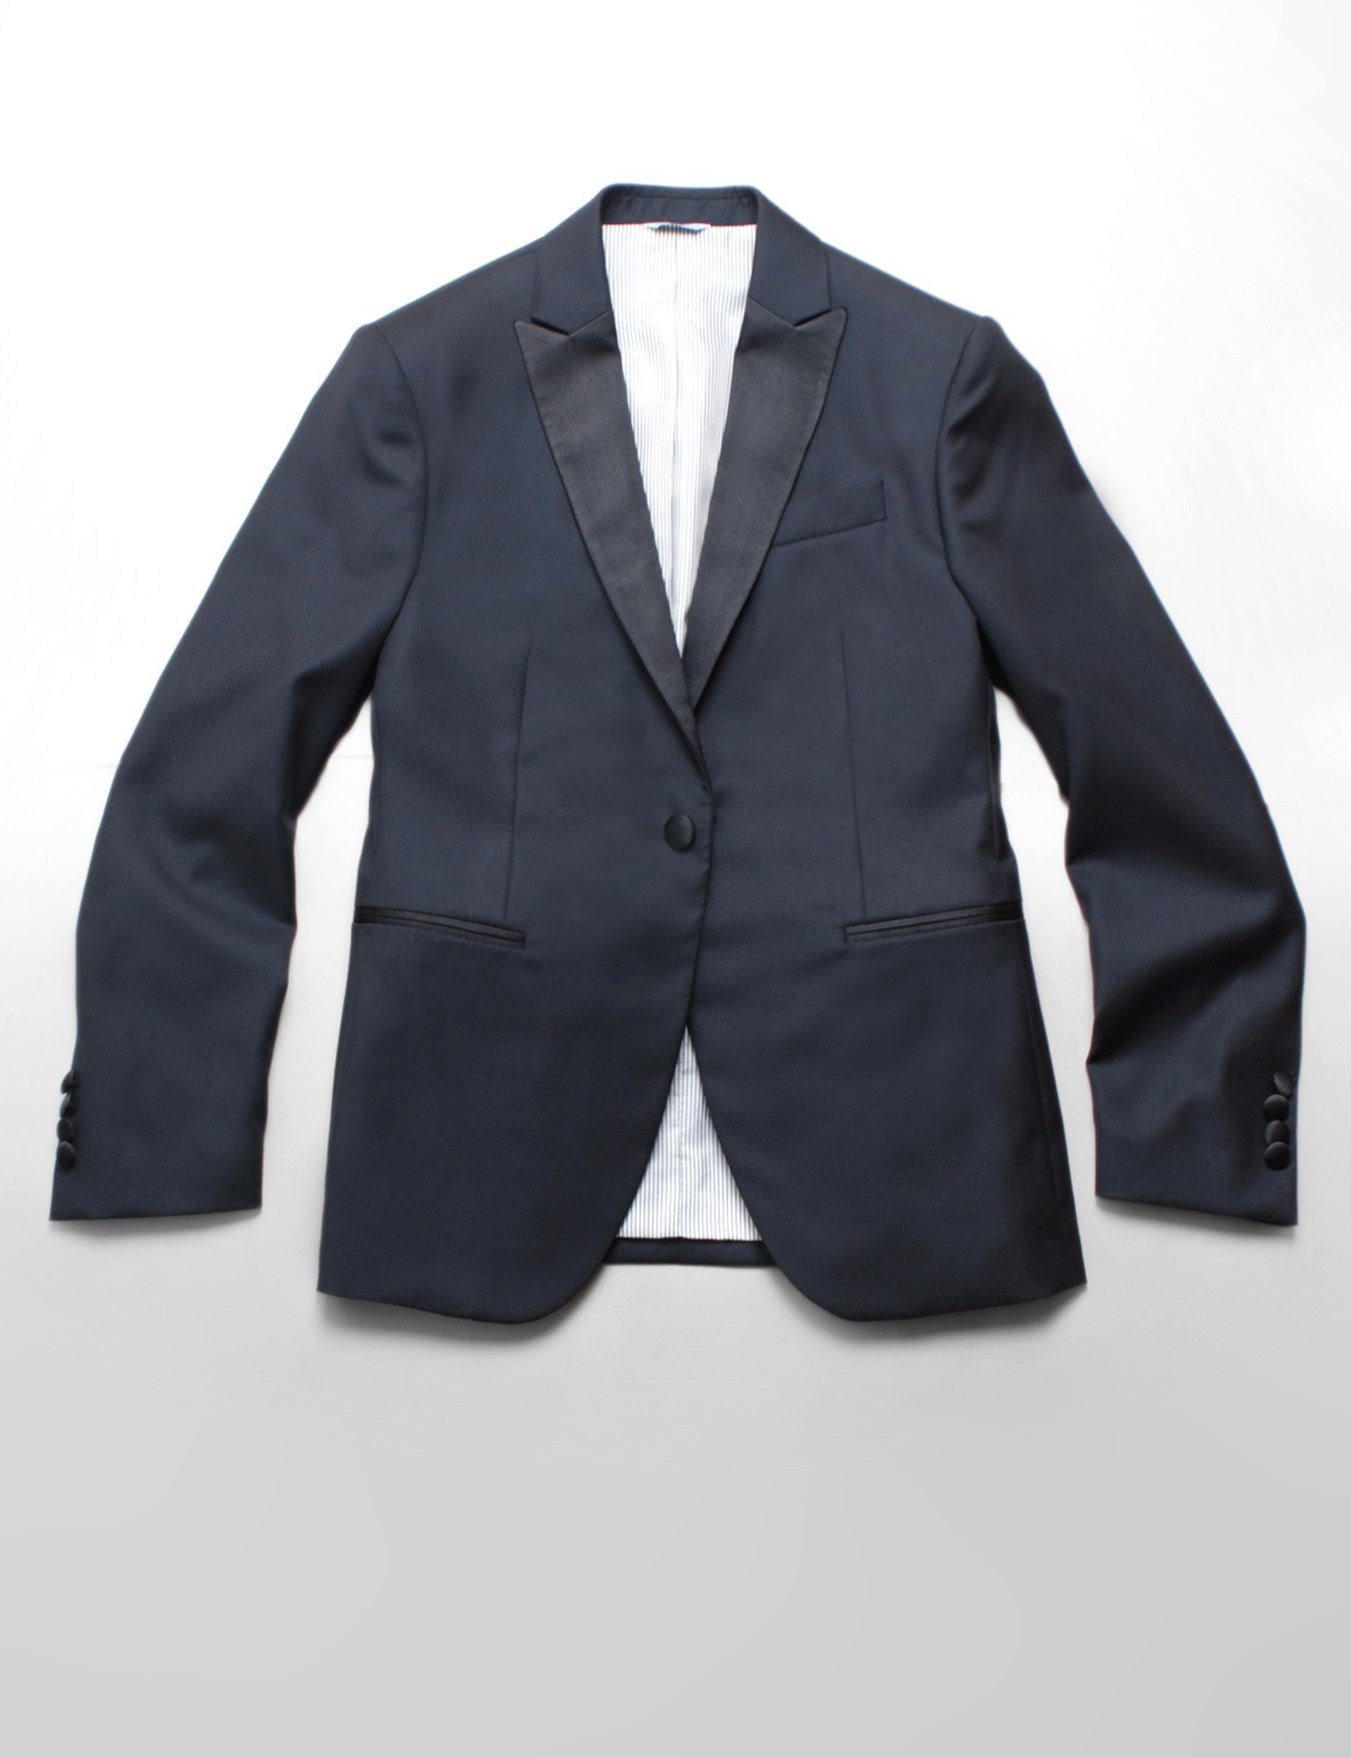 BKT50 Peak Lapel Tuxedo Jacket in Super 110s - Black with Satin